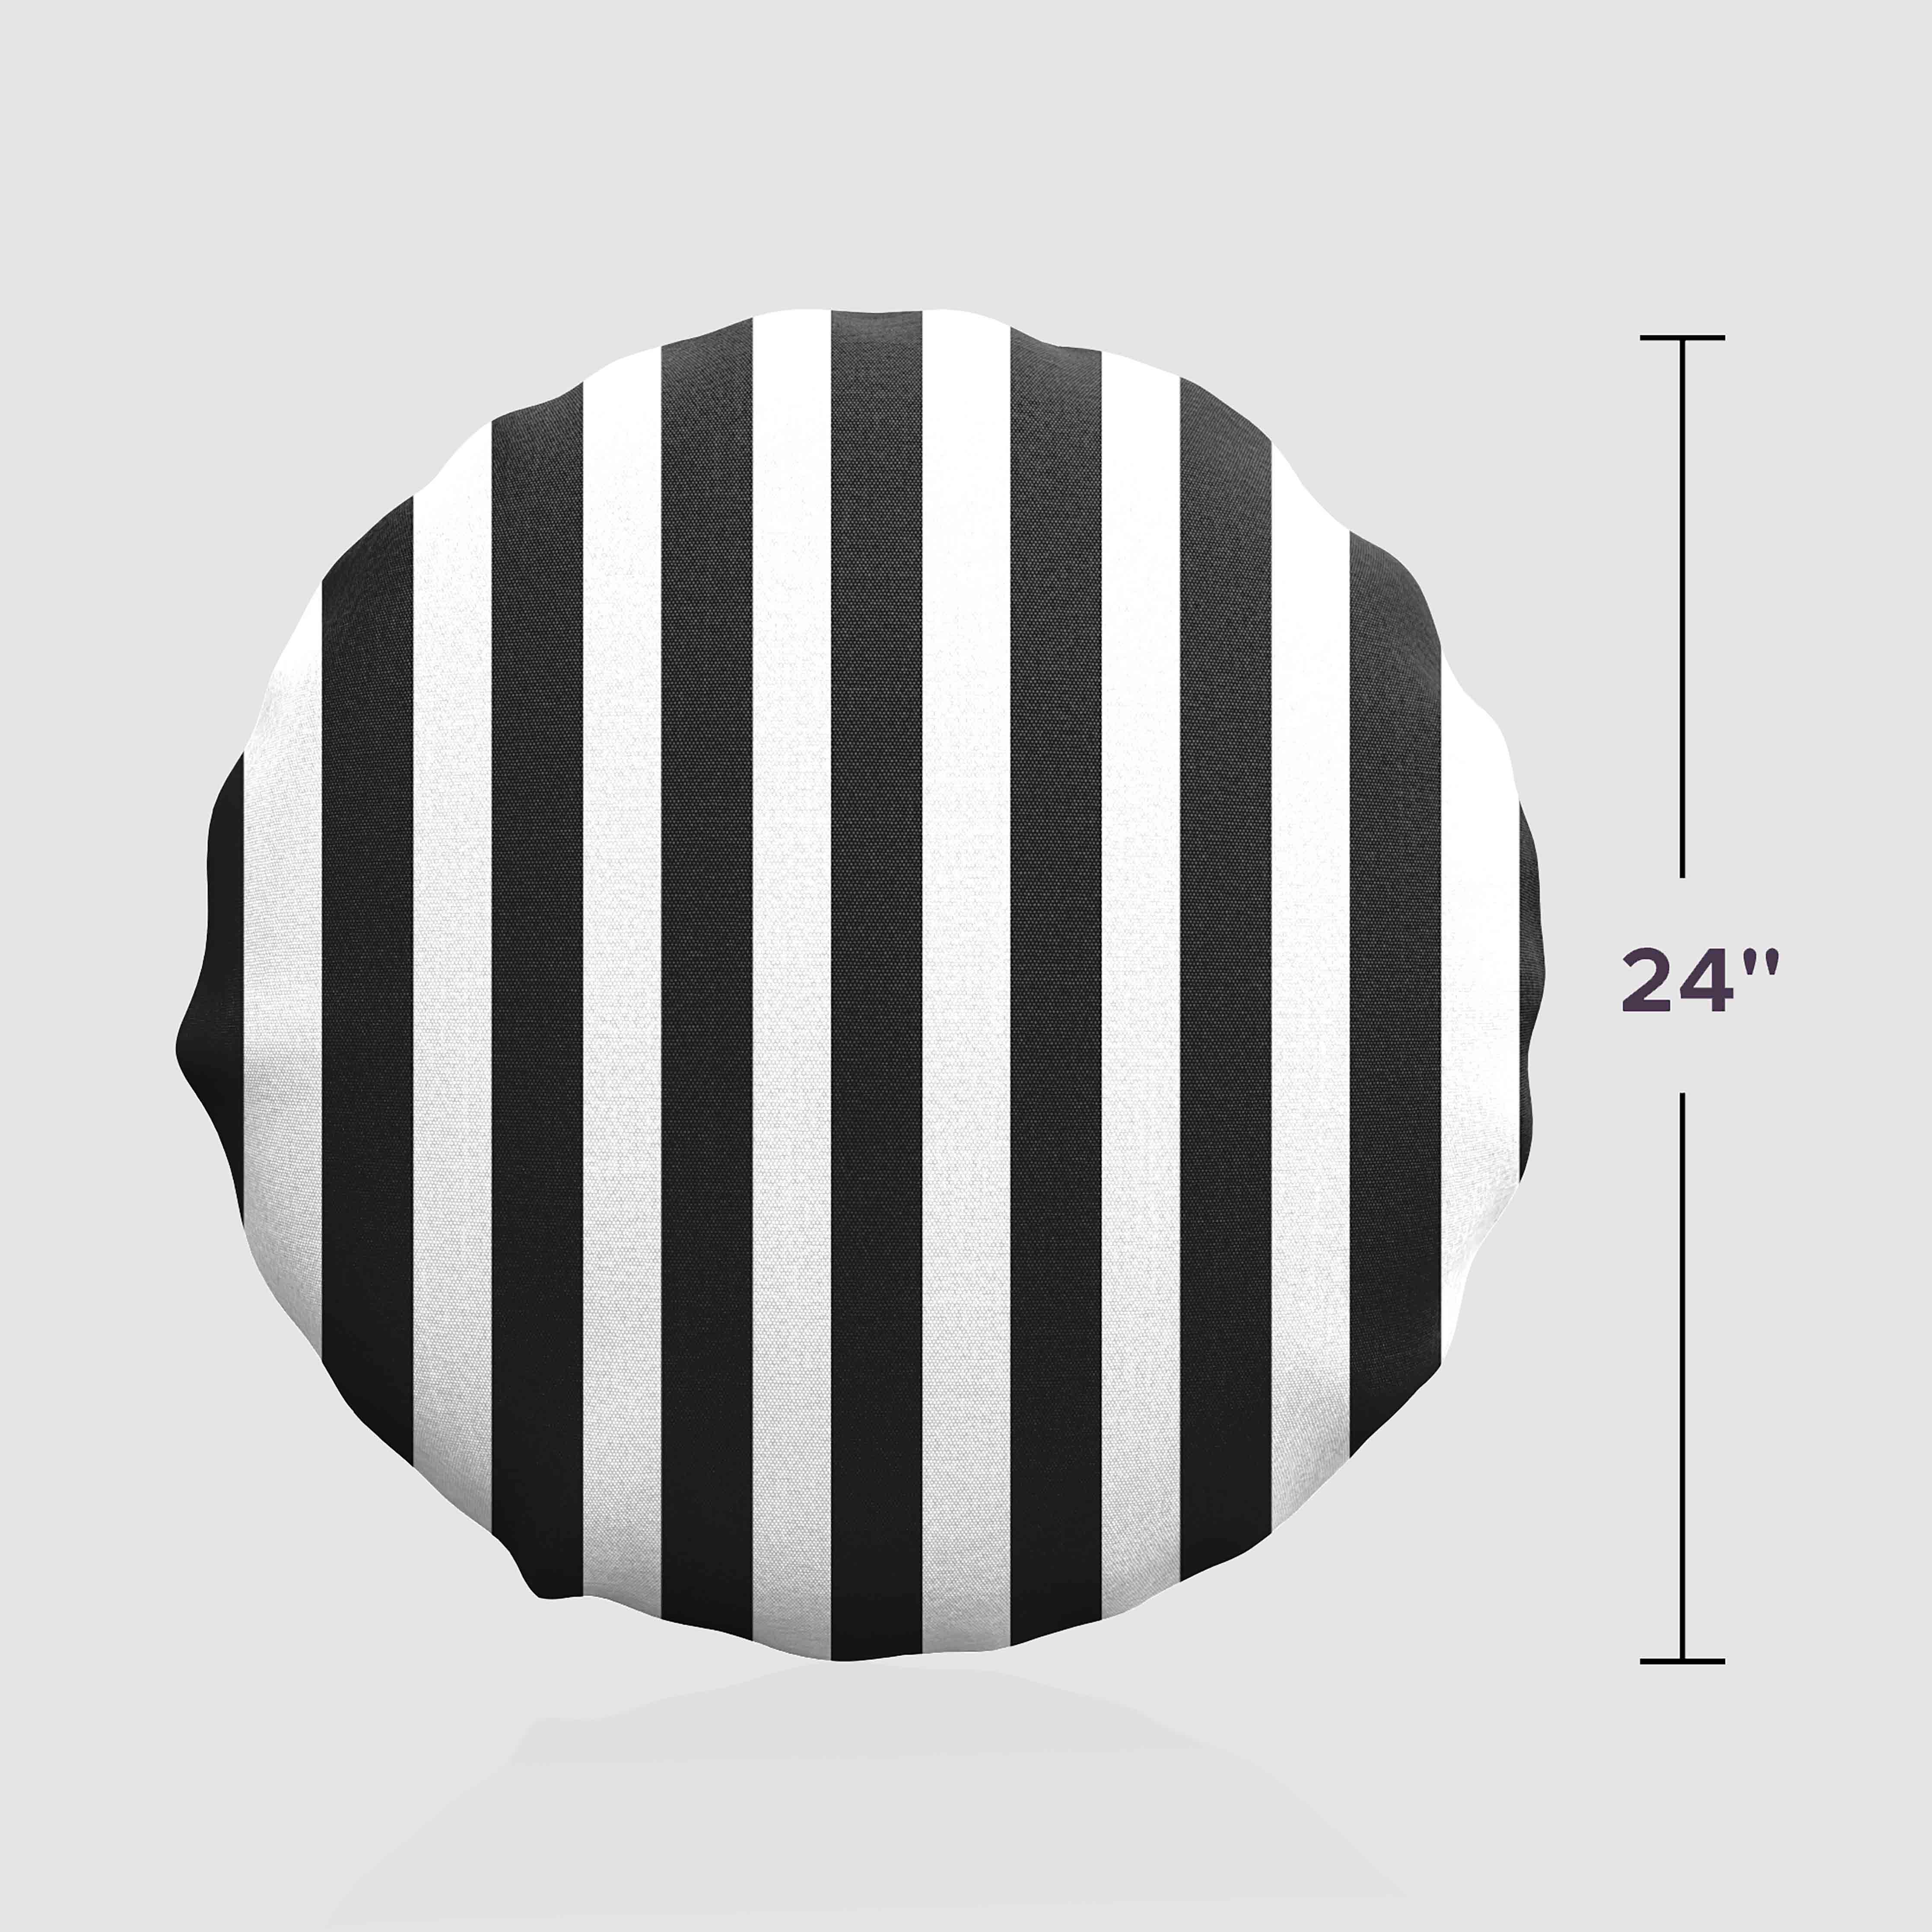 #size_24 in Diameter